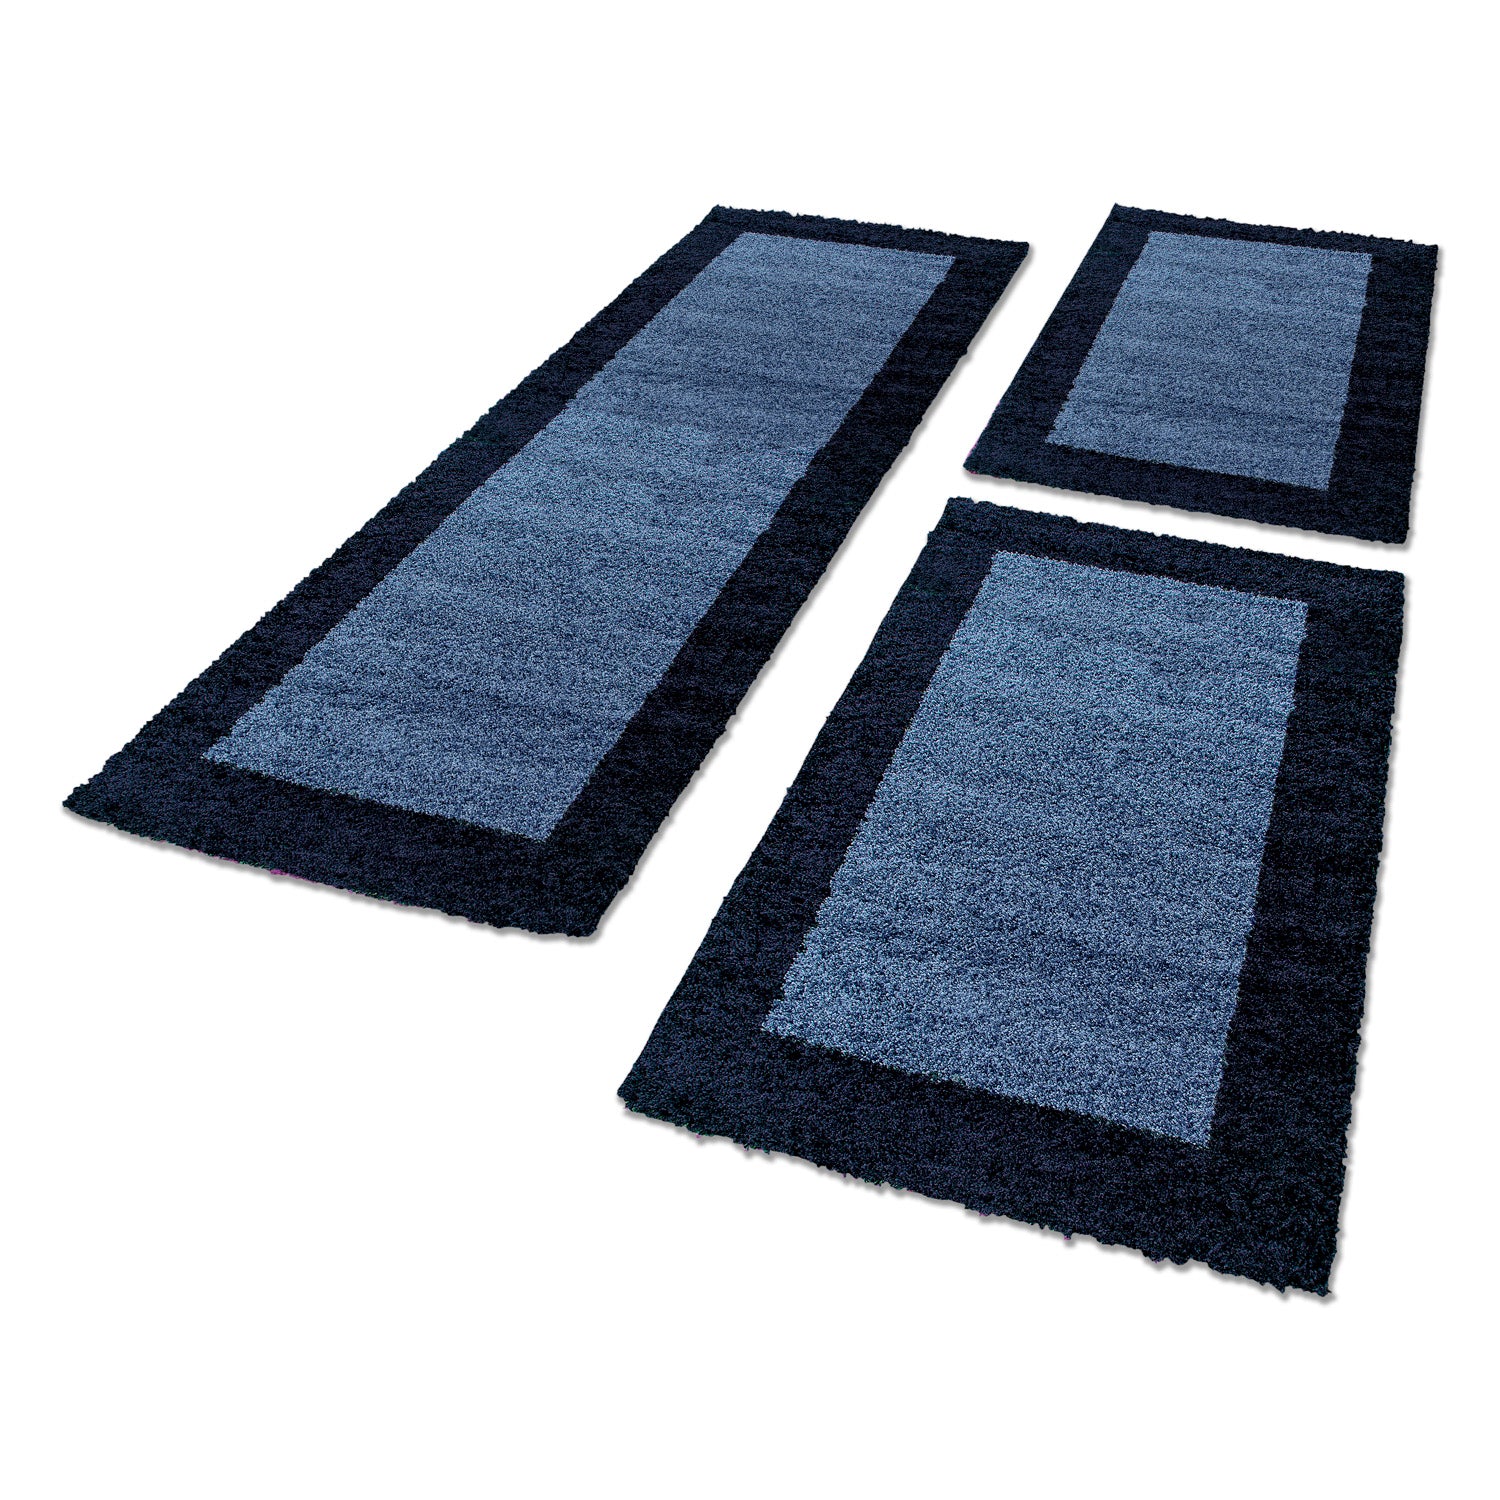 Bettumrandung Hochflor Teppich Läuferset 3 teilig Bordüre muster Marineblau Blau